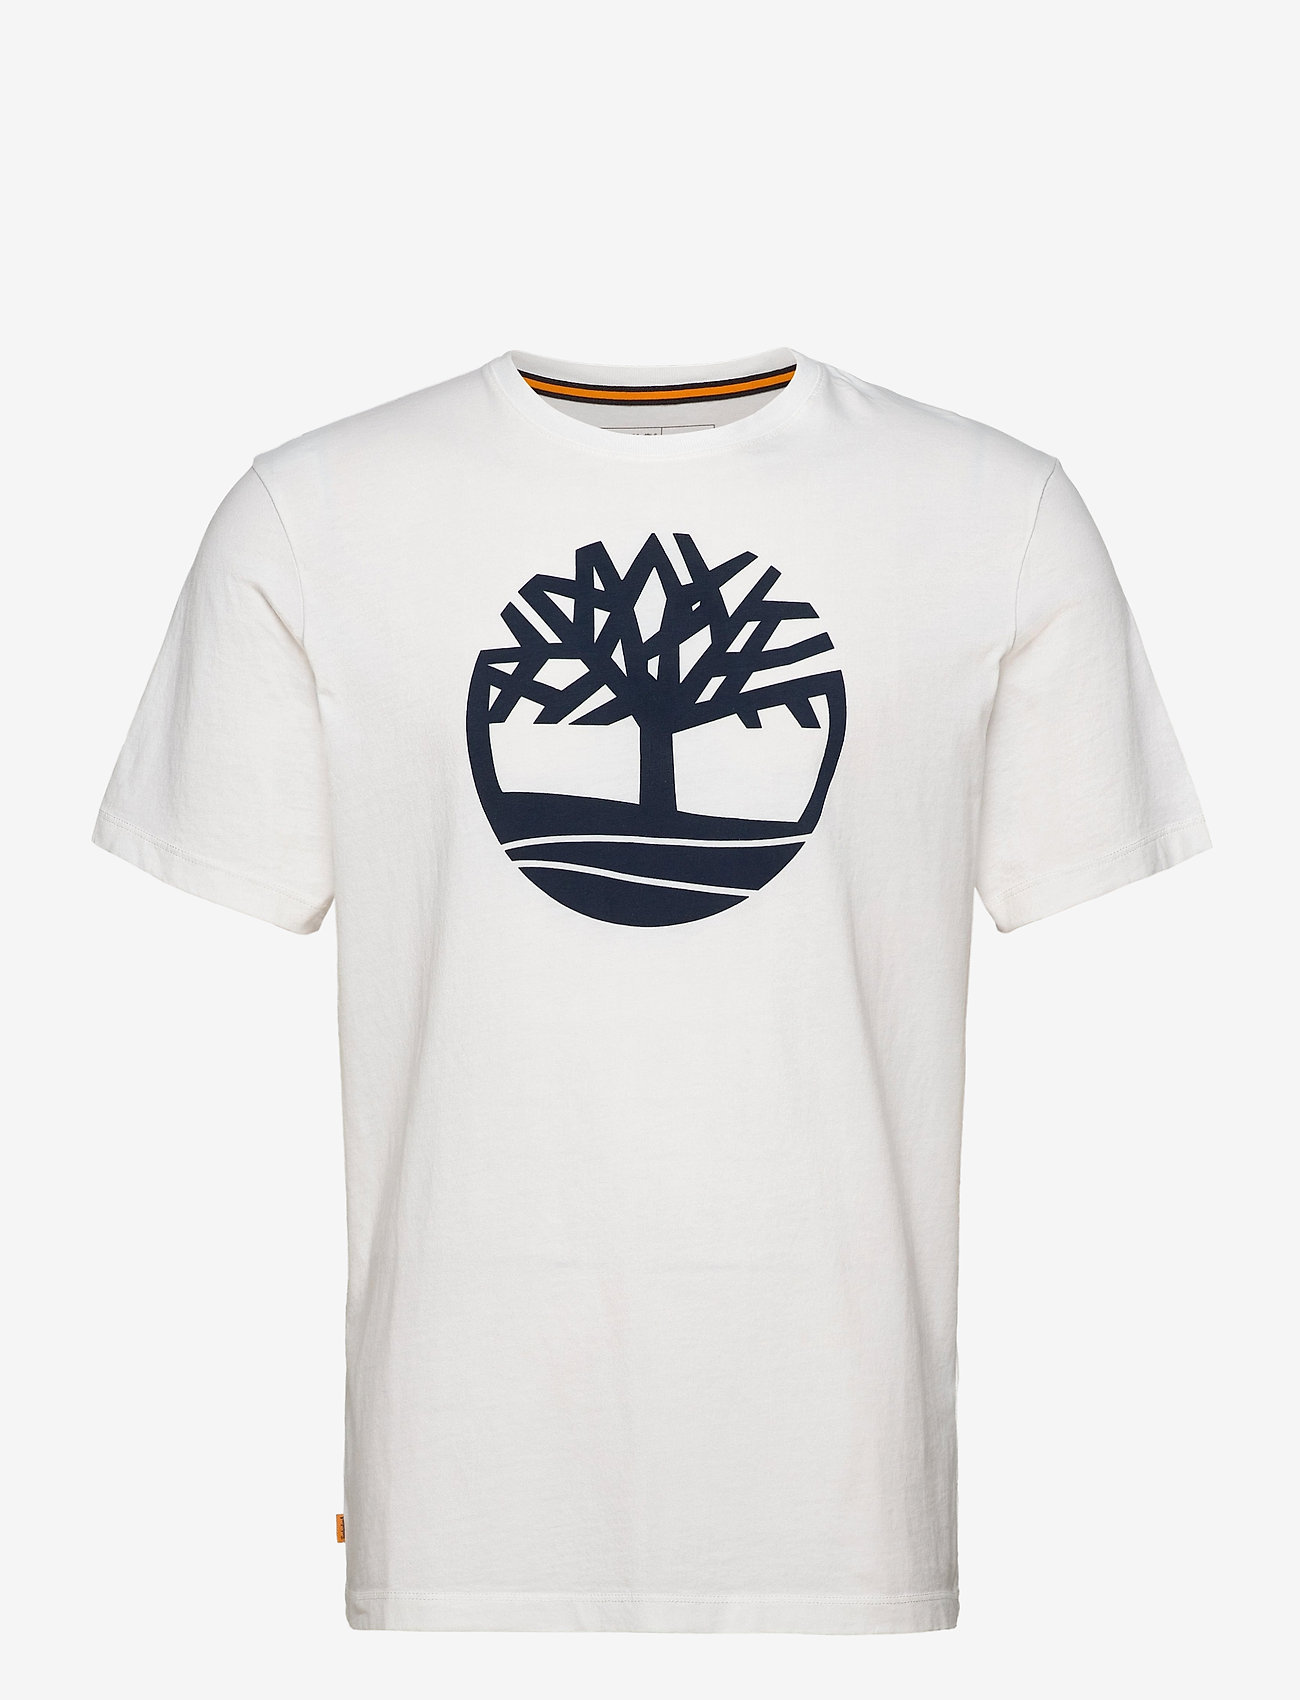 Timberland - KENNEBEC RIVER Tree Logo Short Sleeve Tee WHITE - najniższe ceny - white - 0